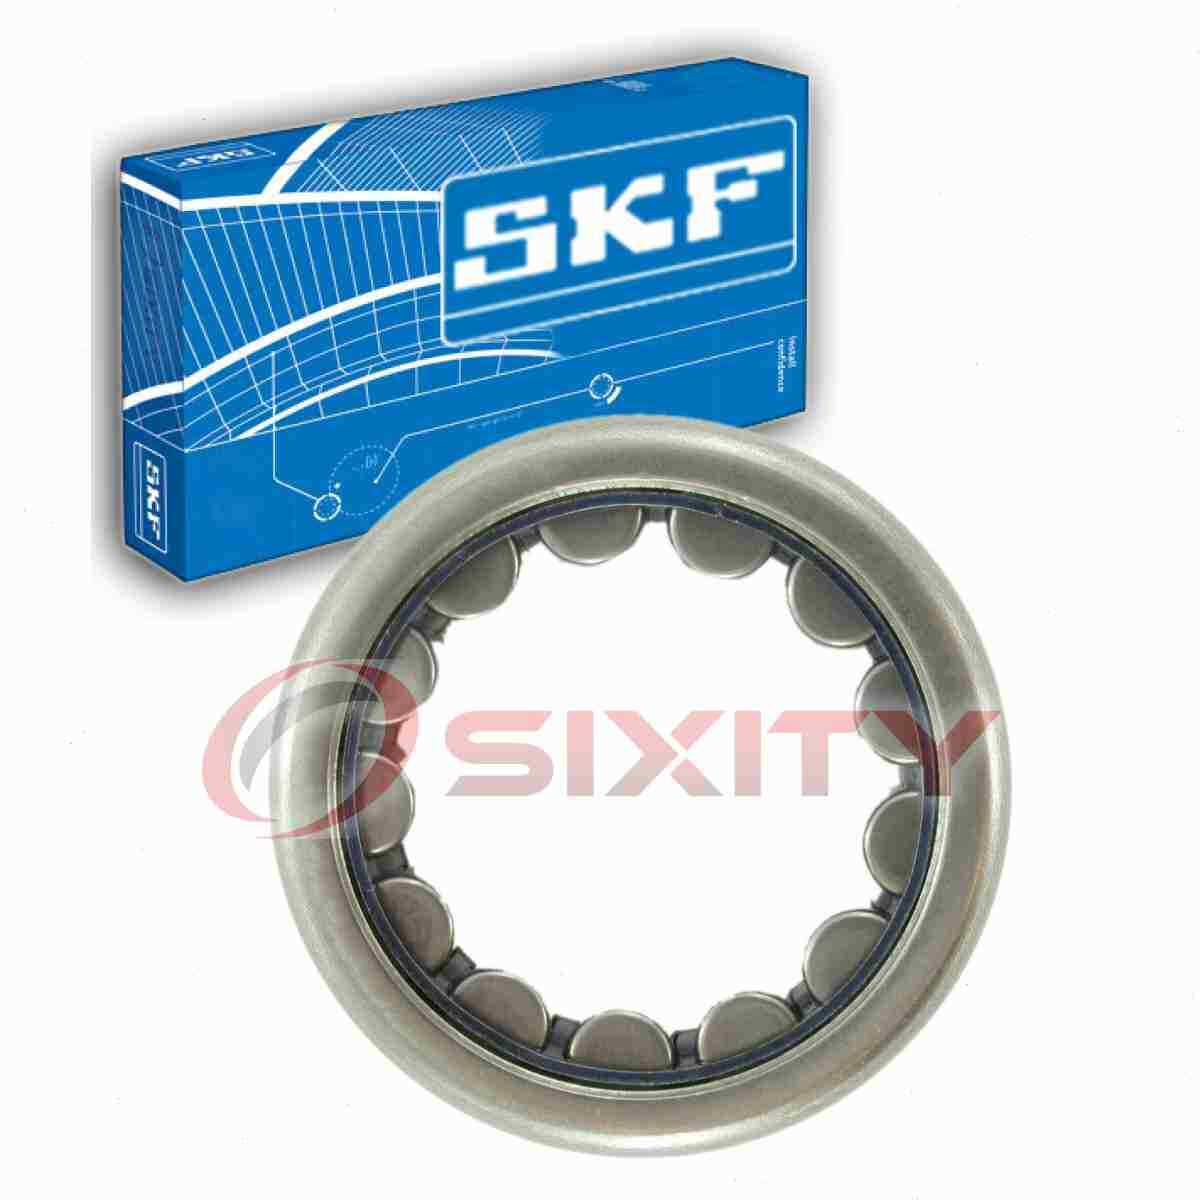 SKF Rear Wheel Bearing for 1978-1984 Oldsmobile Cutlass Calais Axle nc